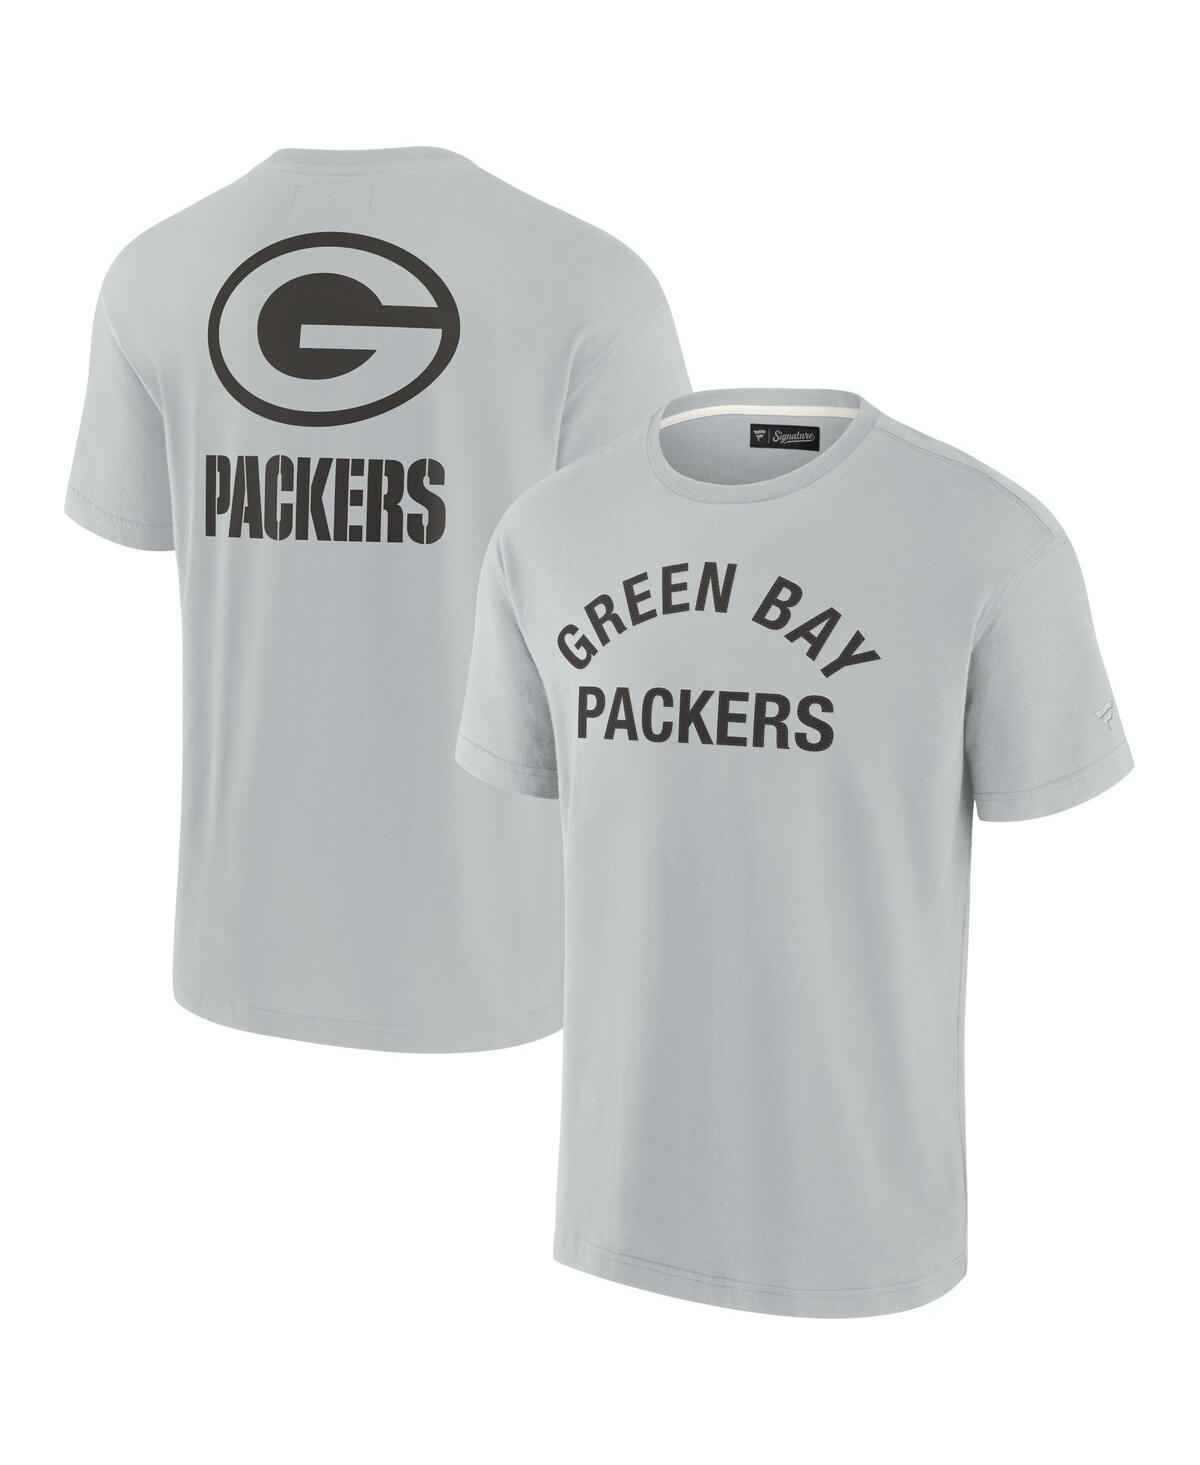 Men's and Women's Fanatics Signature Gray Green Bay Packers Super Soft Short Sleeve T-shirt - Gray